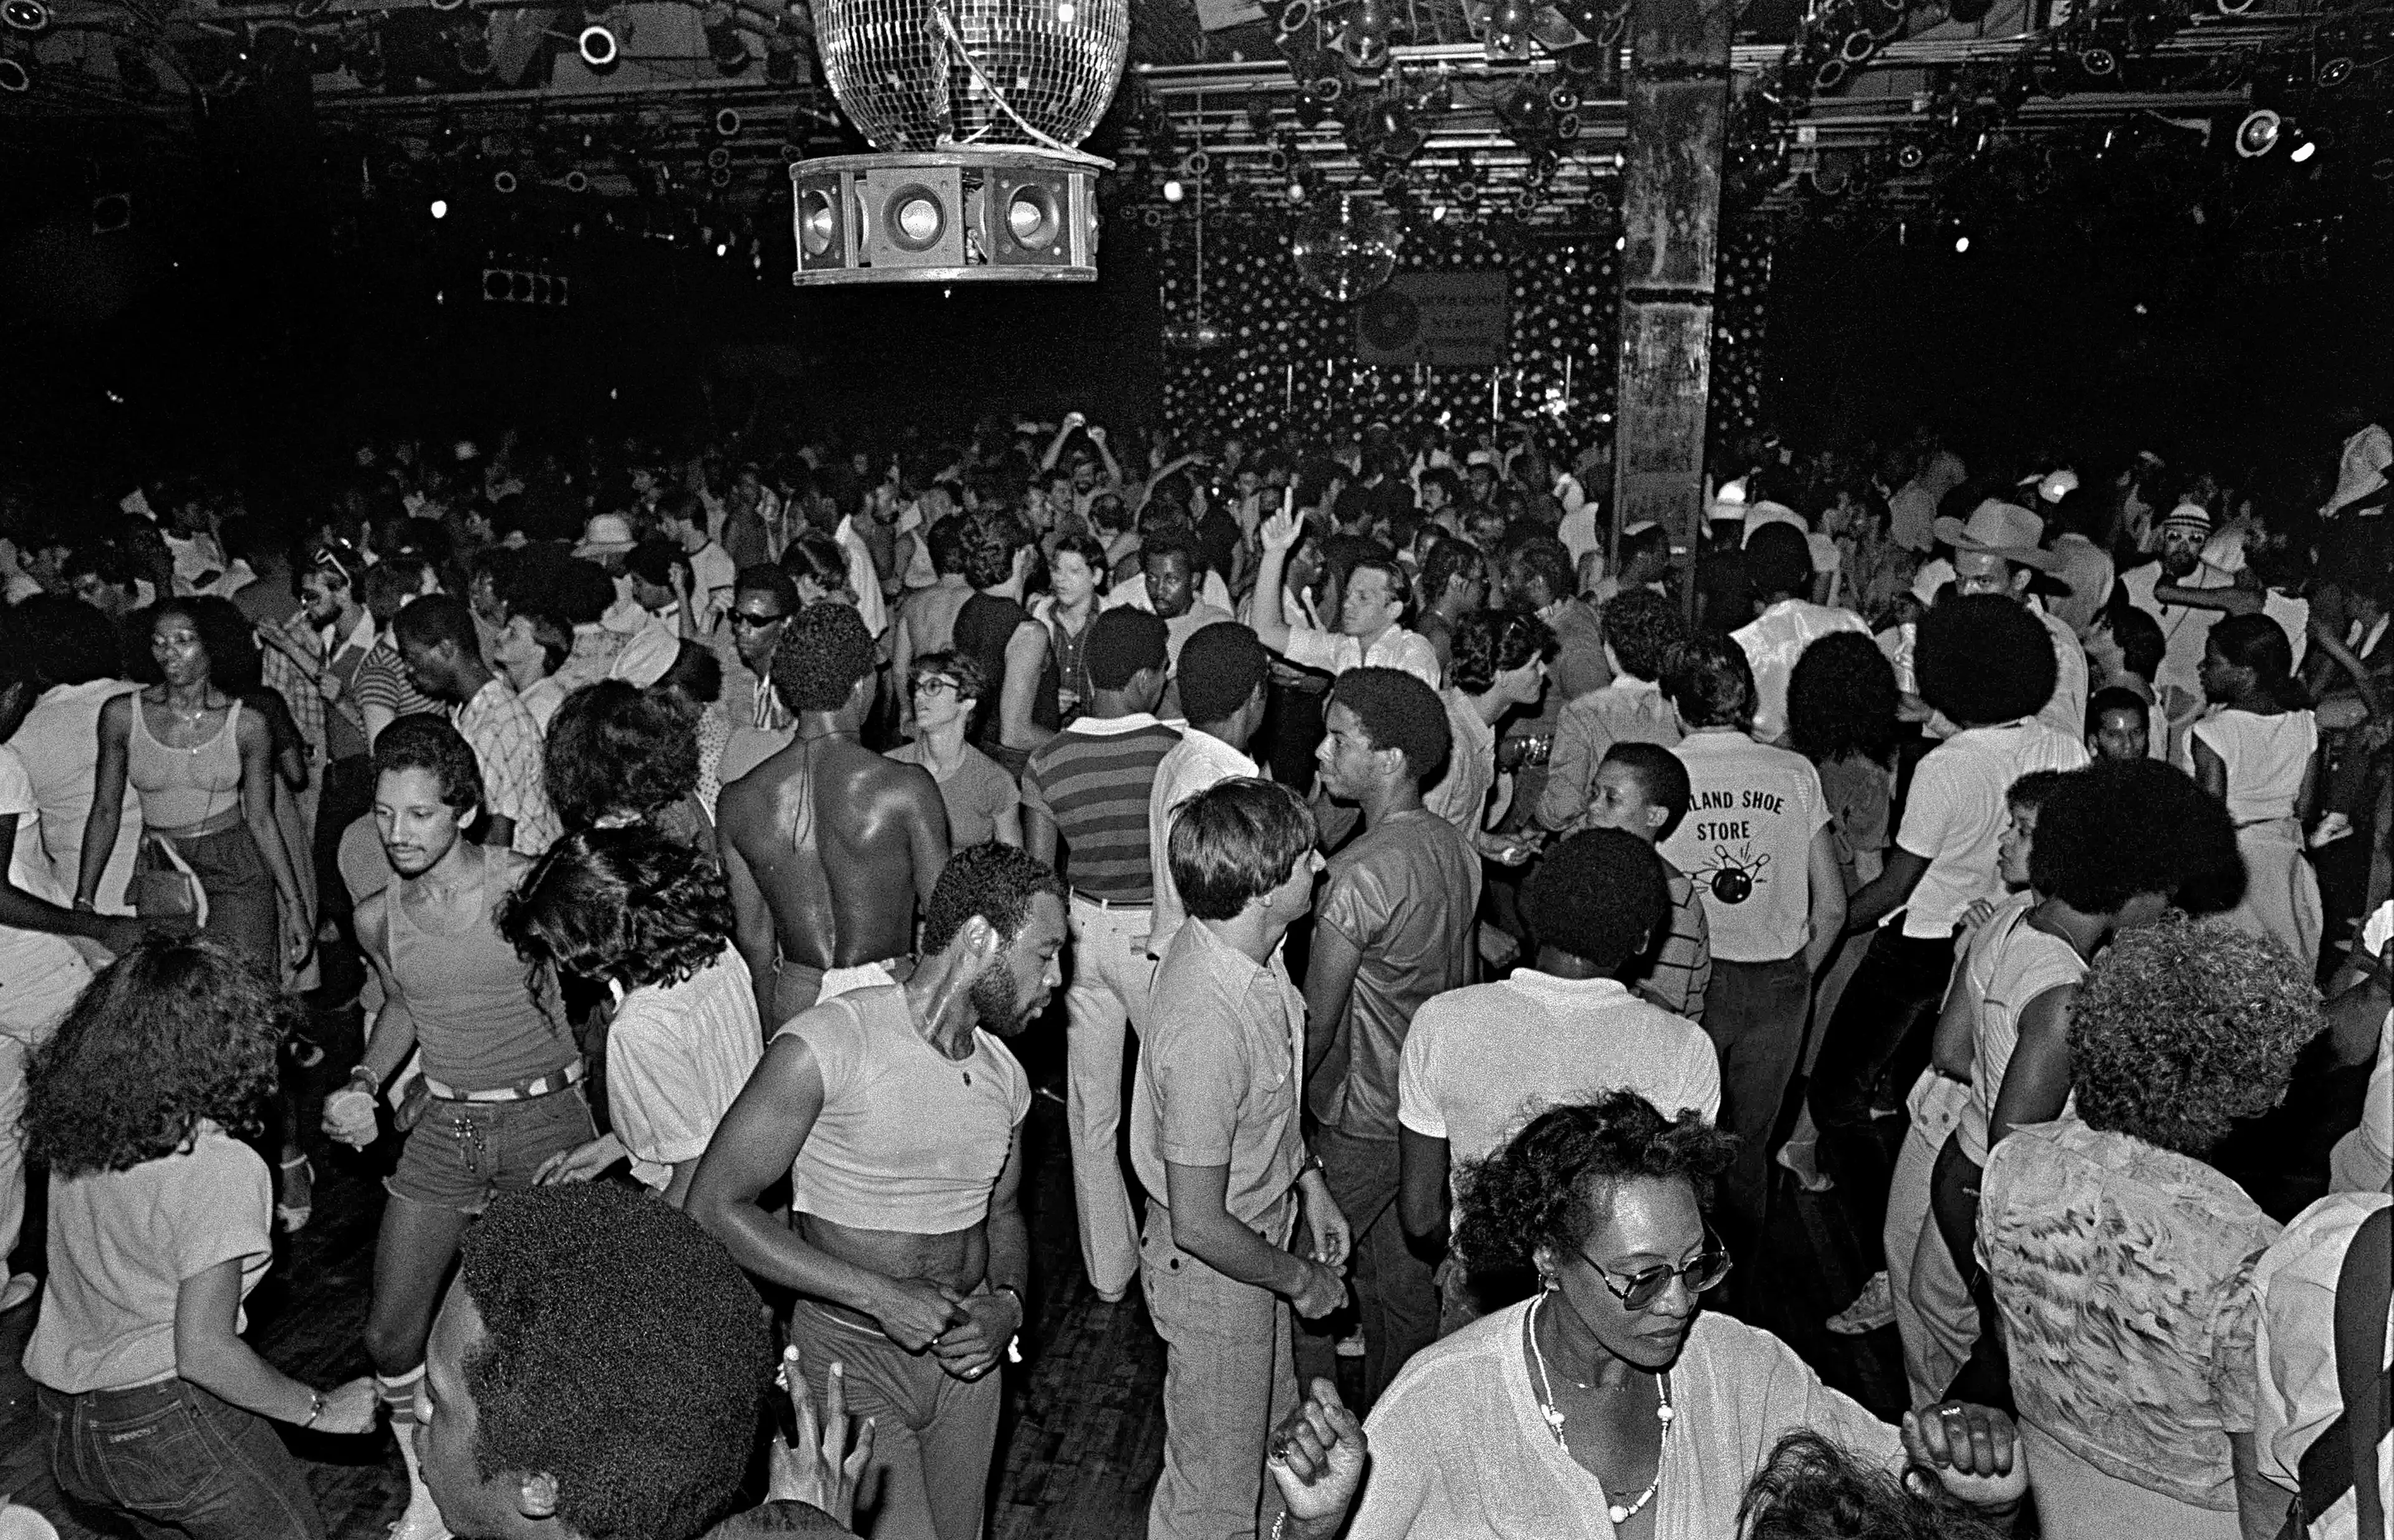 The dance floor of legendary disco Paradise Garage, NYC 1979.